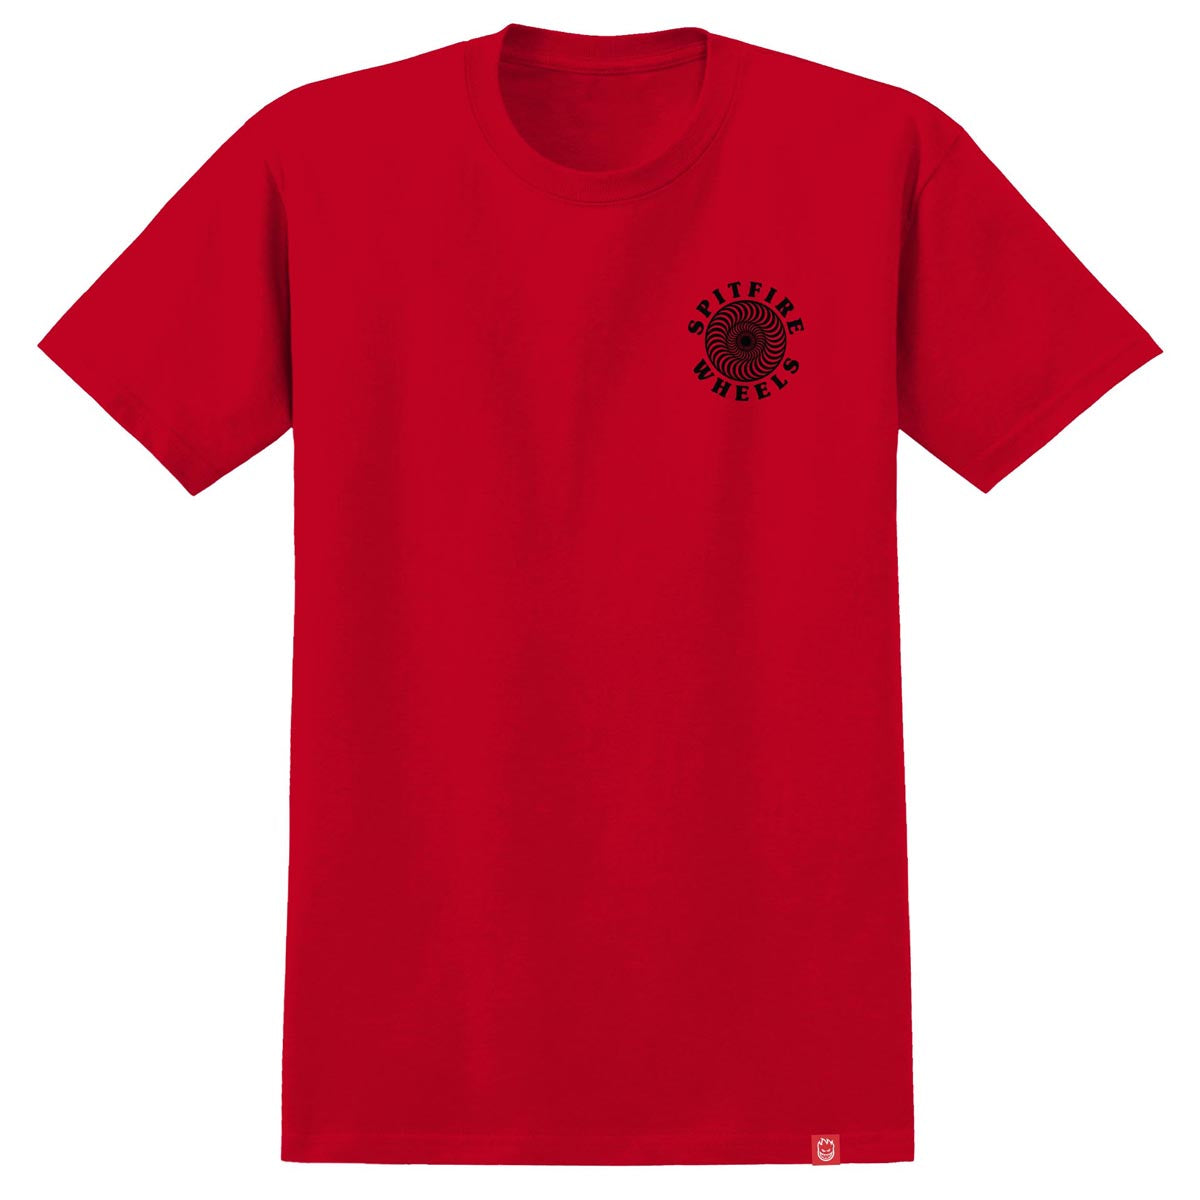 Spitfire Og Classic Fill T-Shirt - Red/Black/White image 2